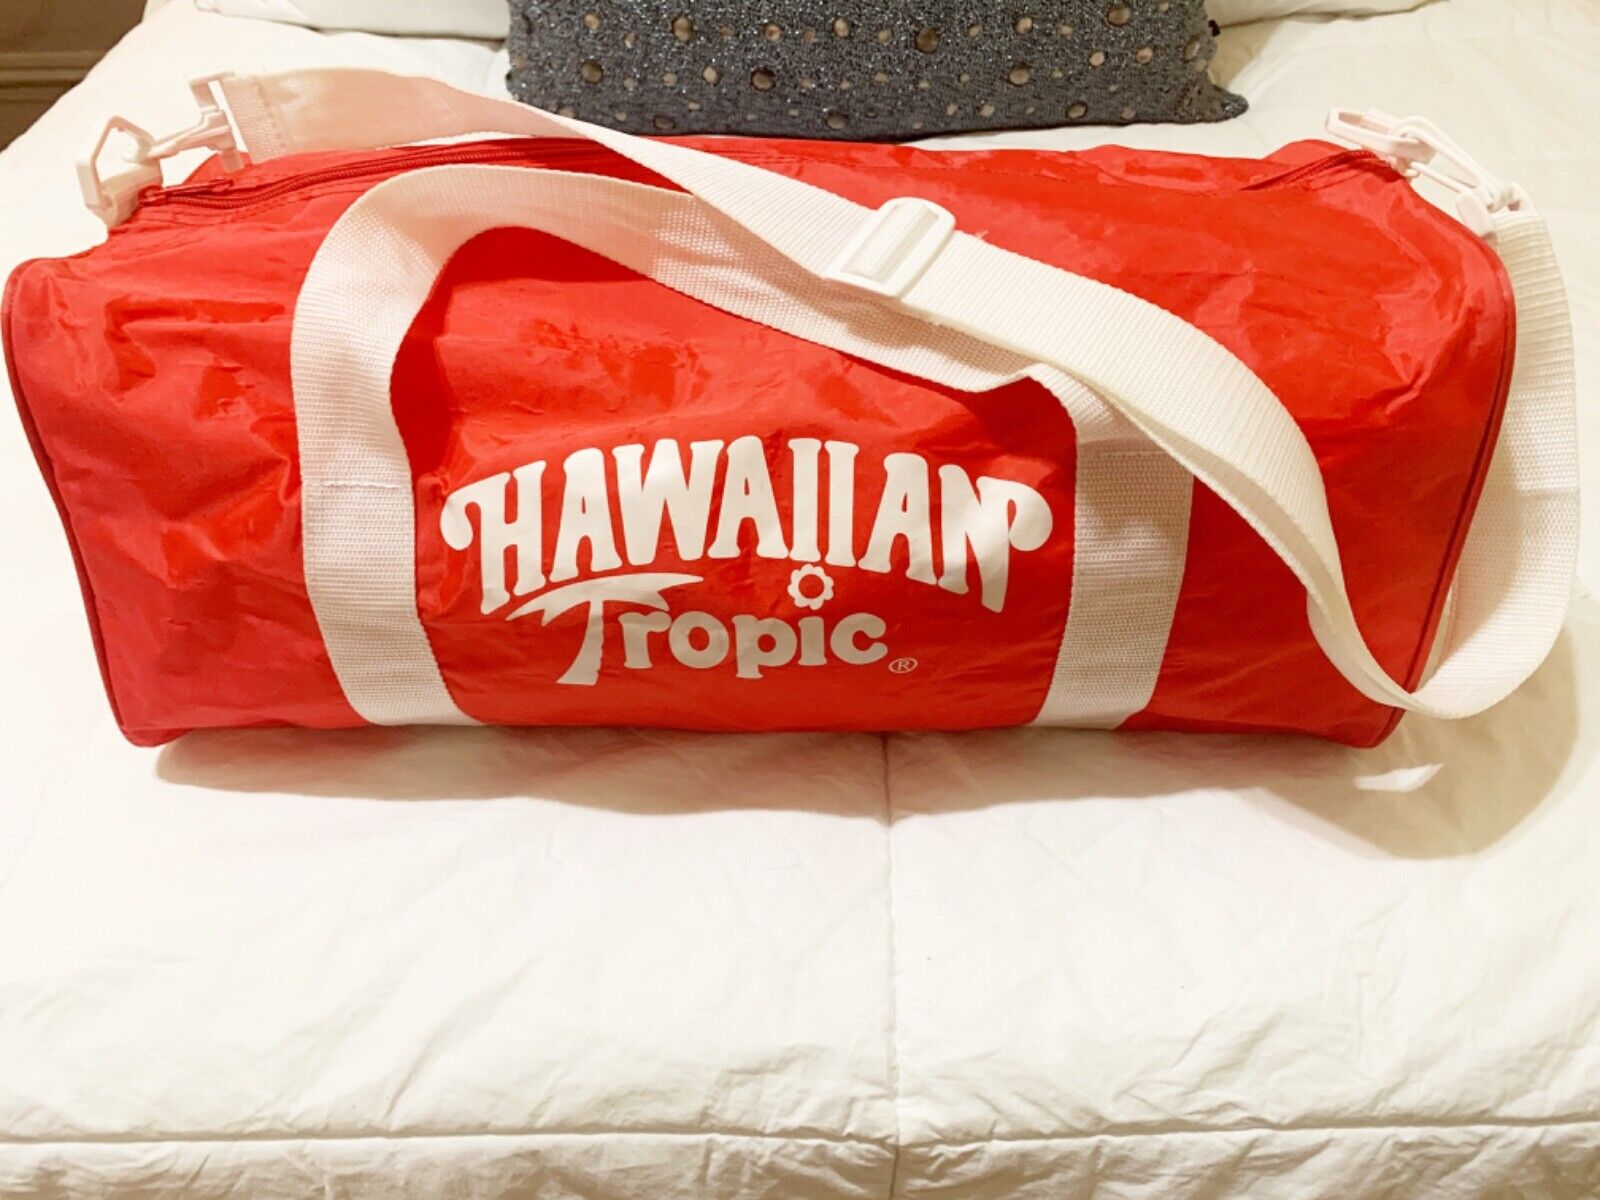 Hawaiian Challenge the lowest Raleigh Mall price Tropic Red Duffel bag